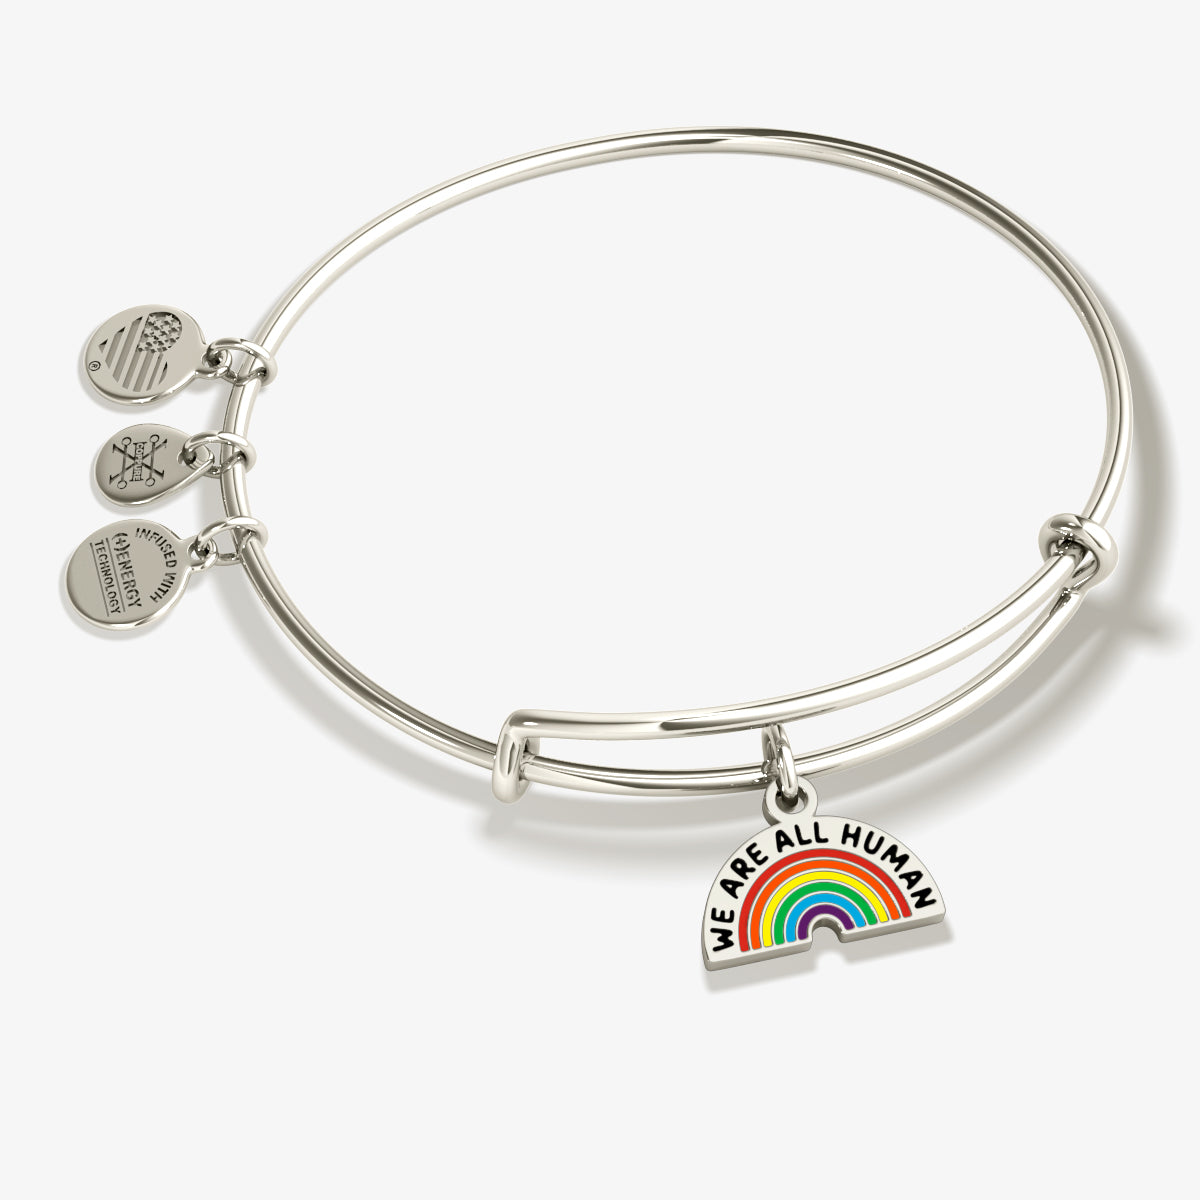 'We Are All Human' Rainbow Charm Bangle Bracelet